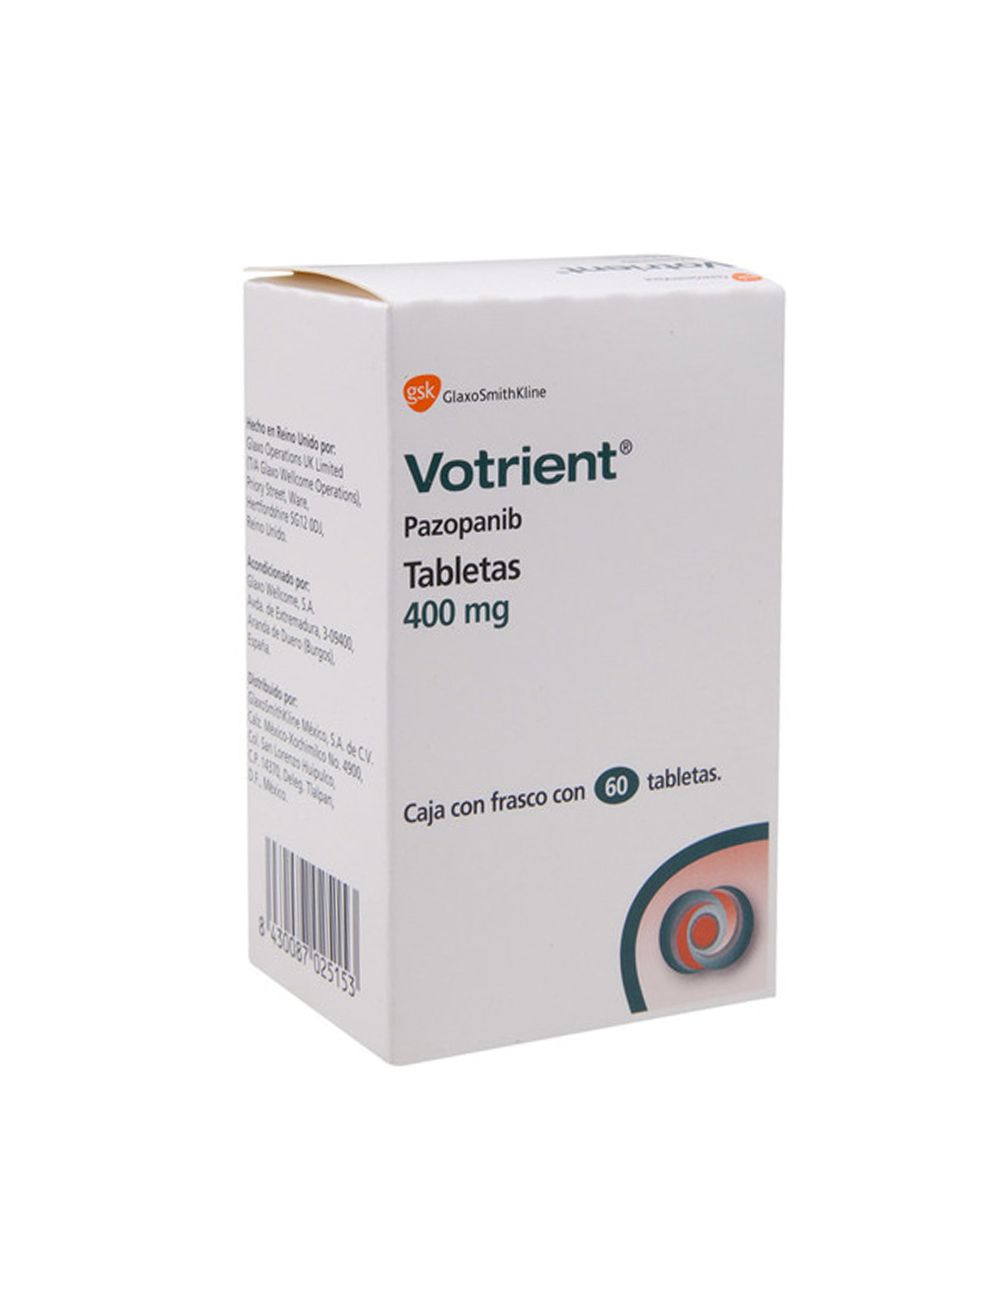 Votrient 400 mg Caja Frasco C/ 60 Tabletas ( Pazopanib )